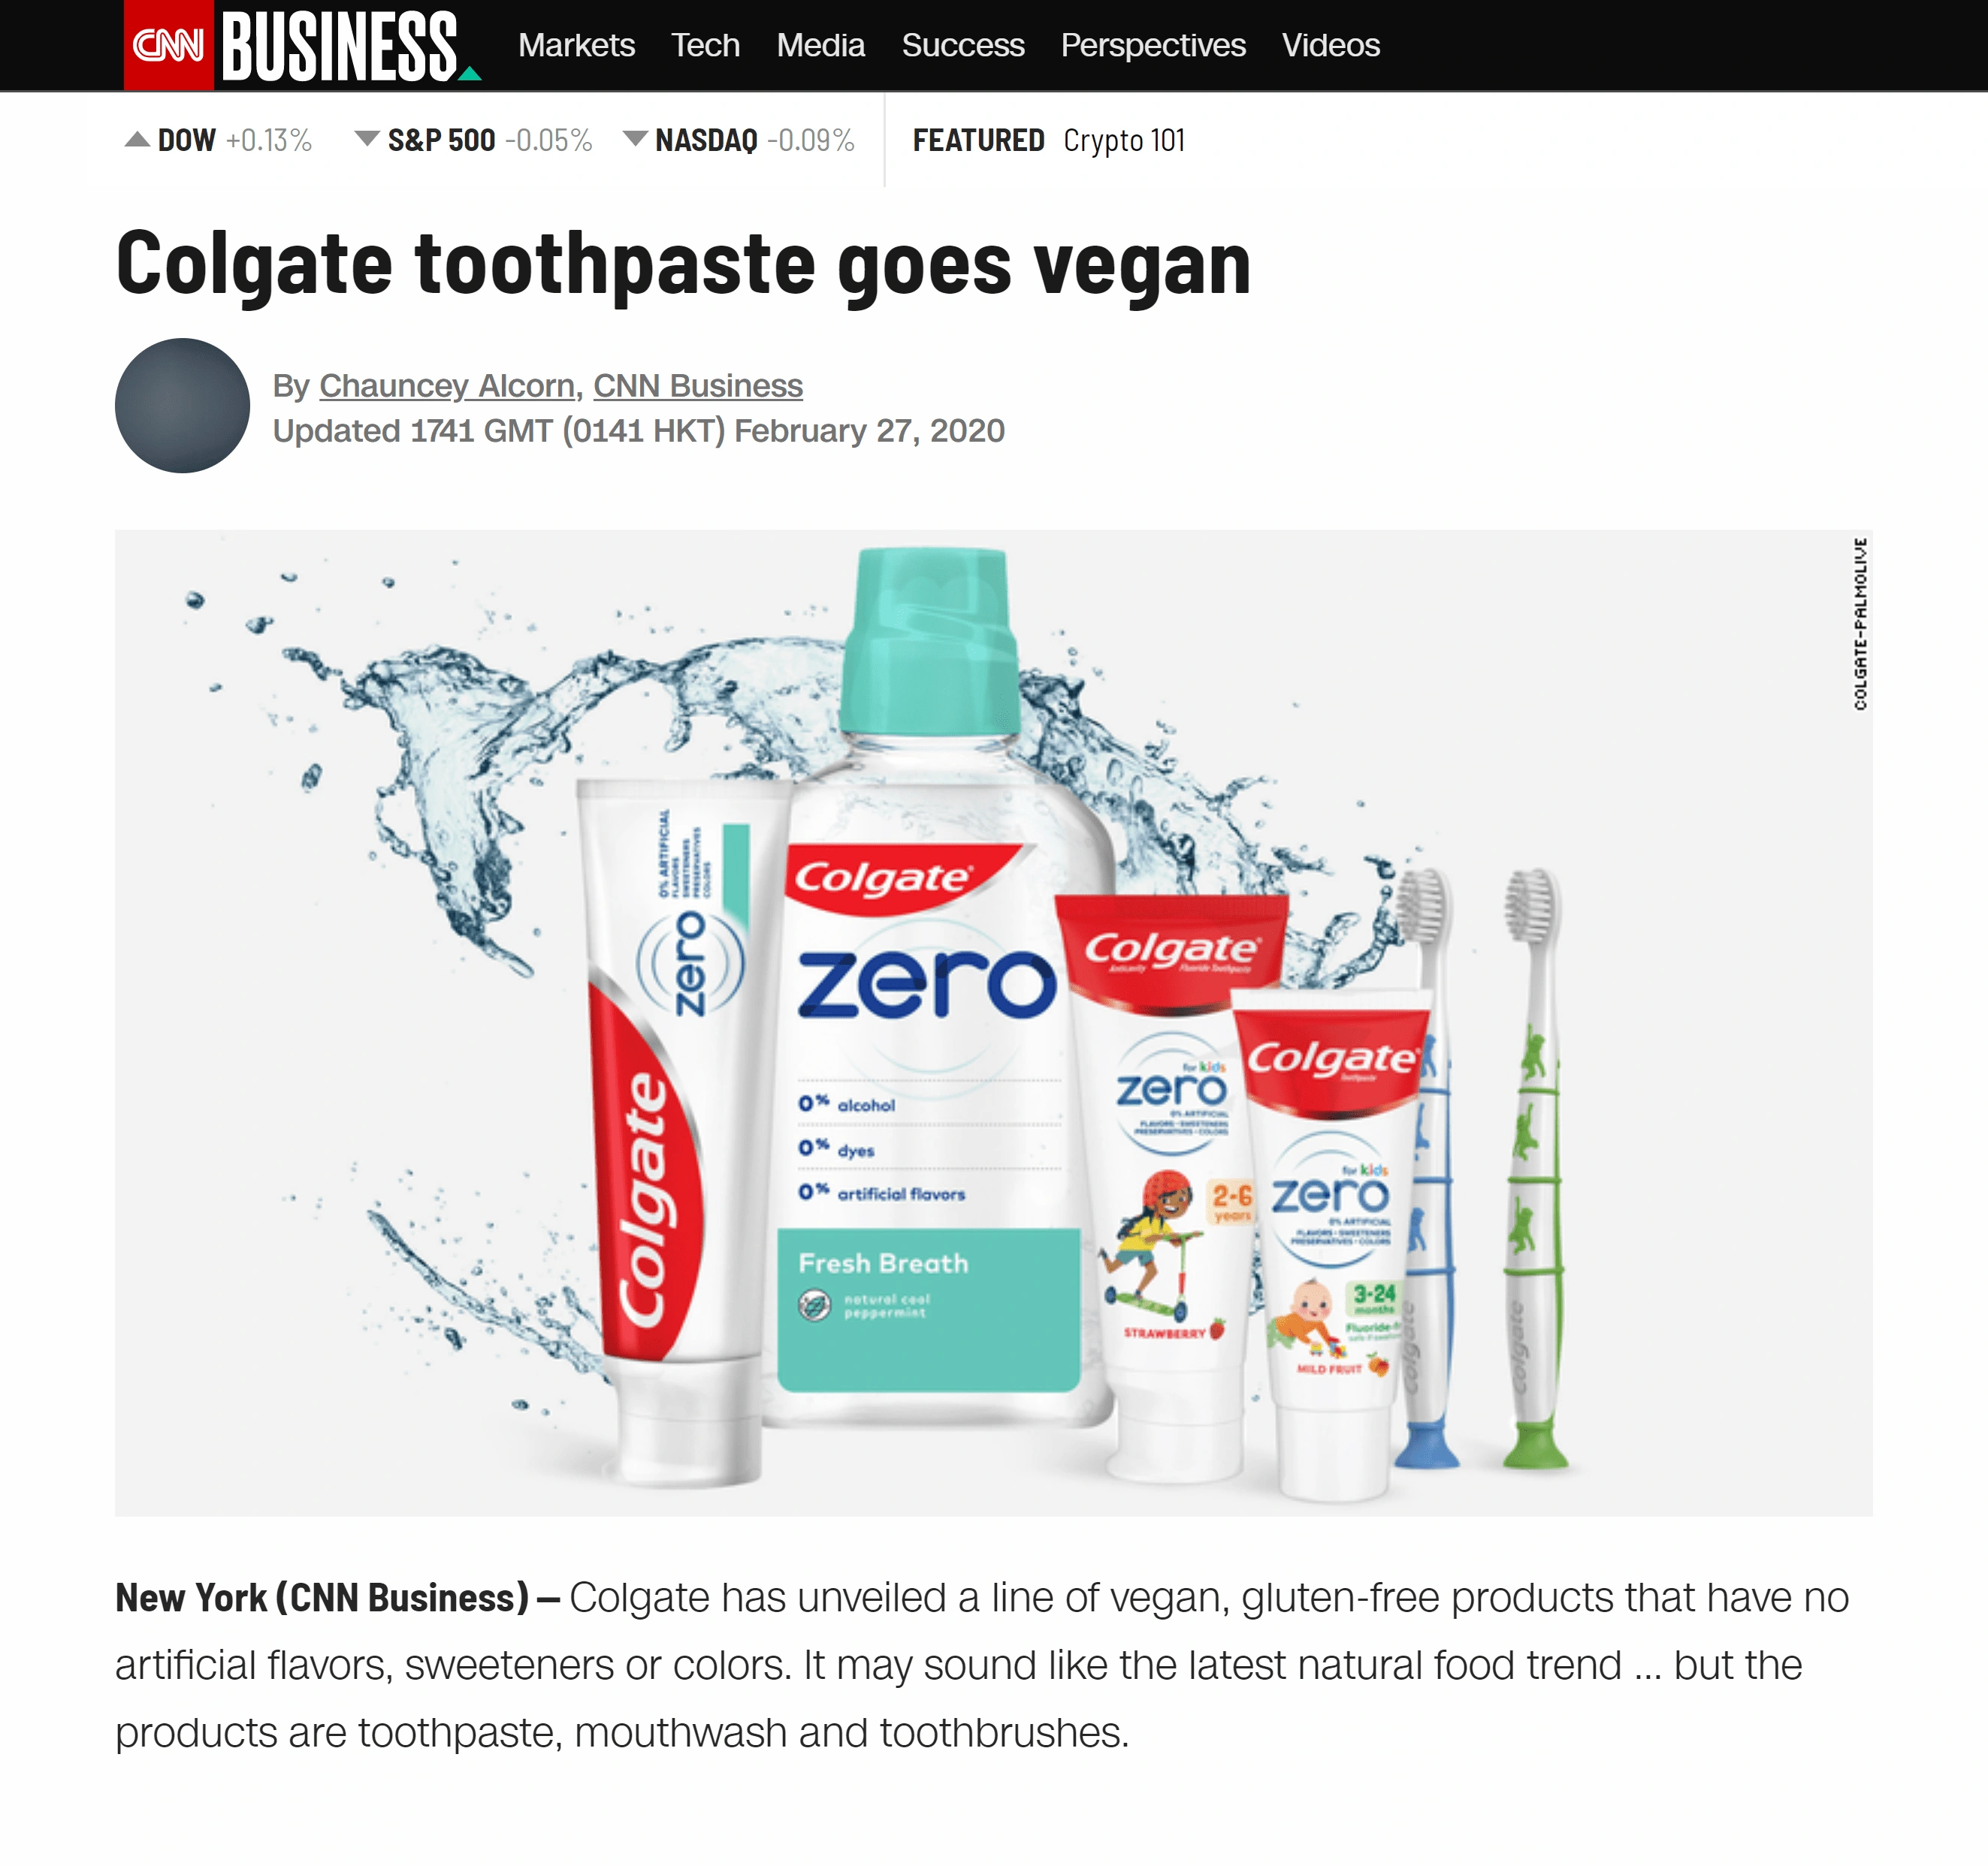 colgate-vegan-toothpaste-min.png